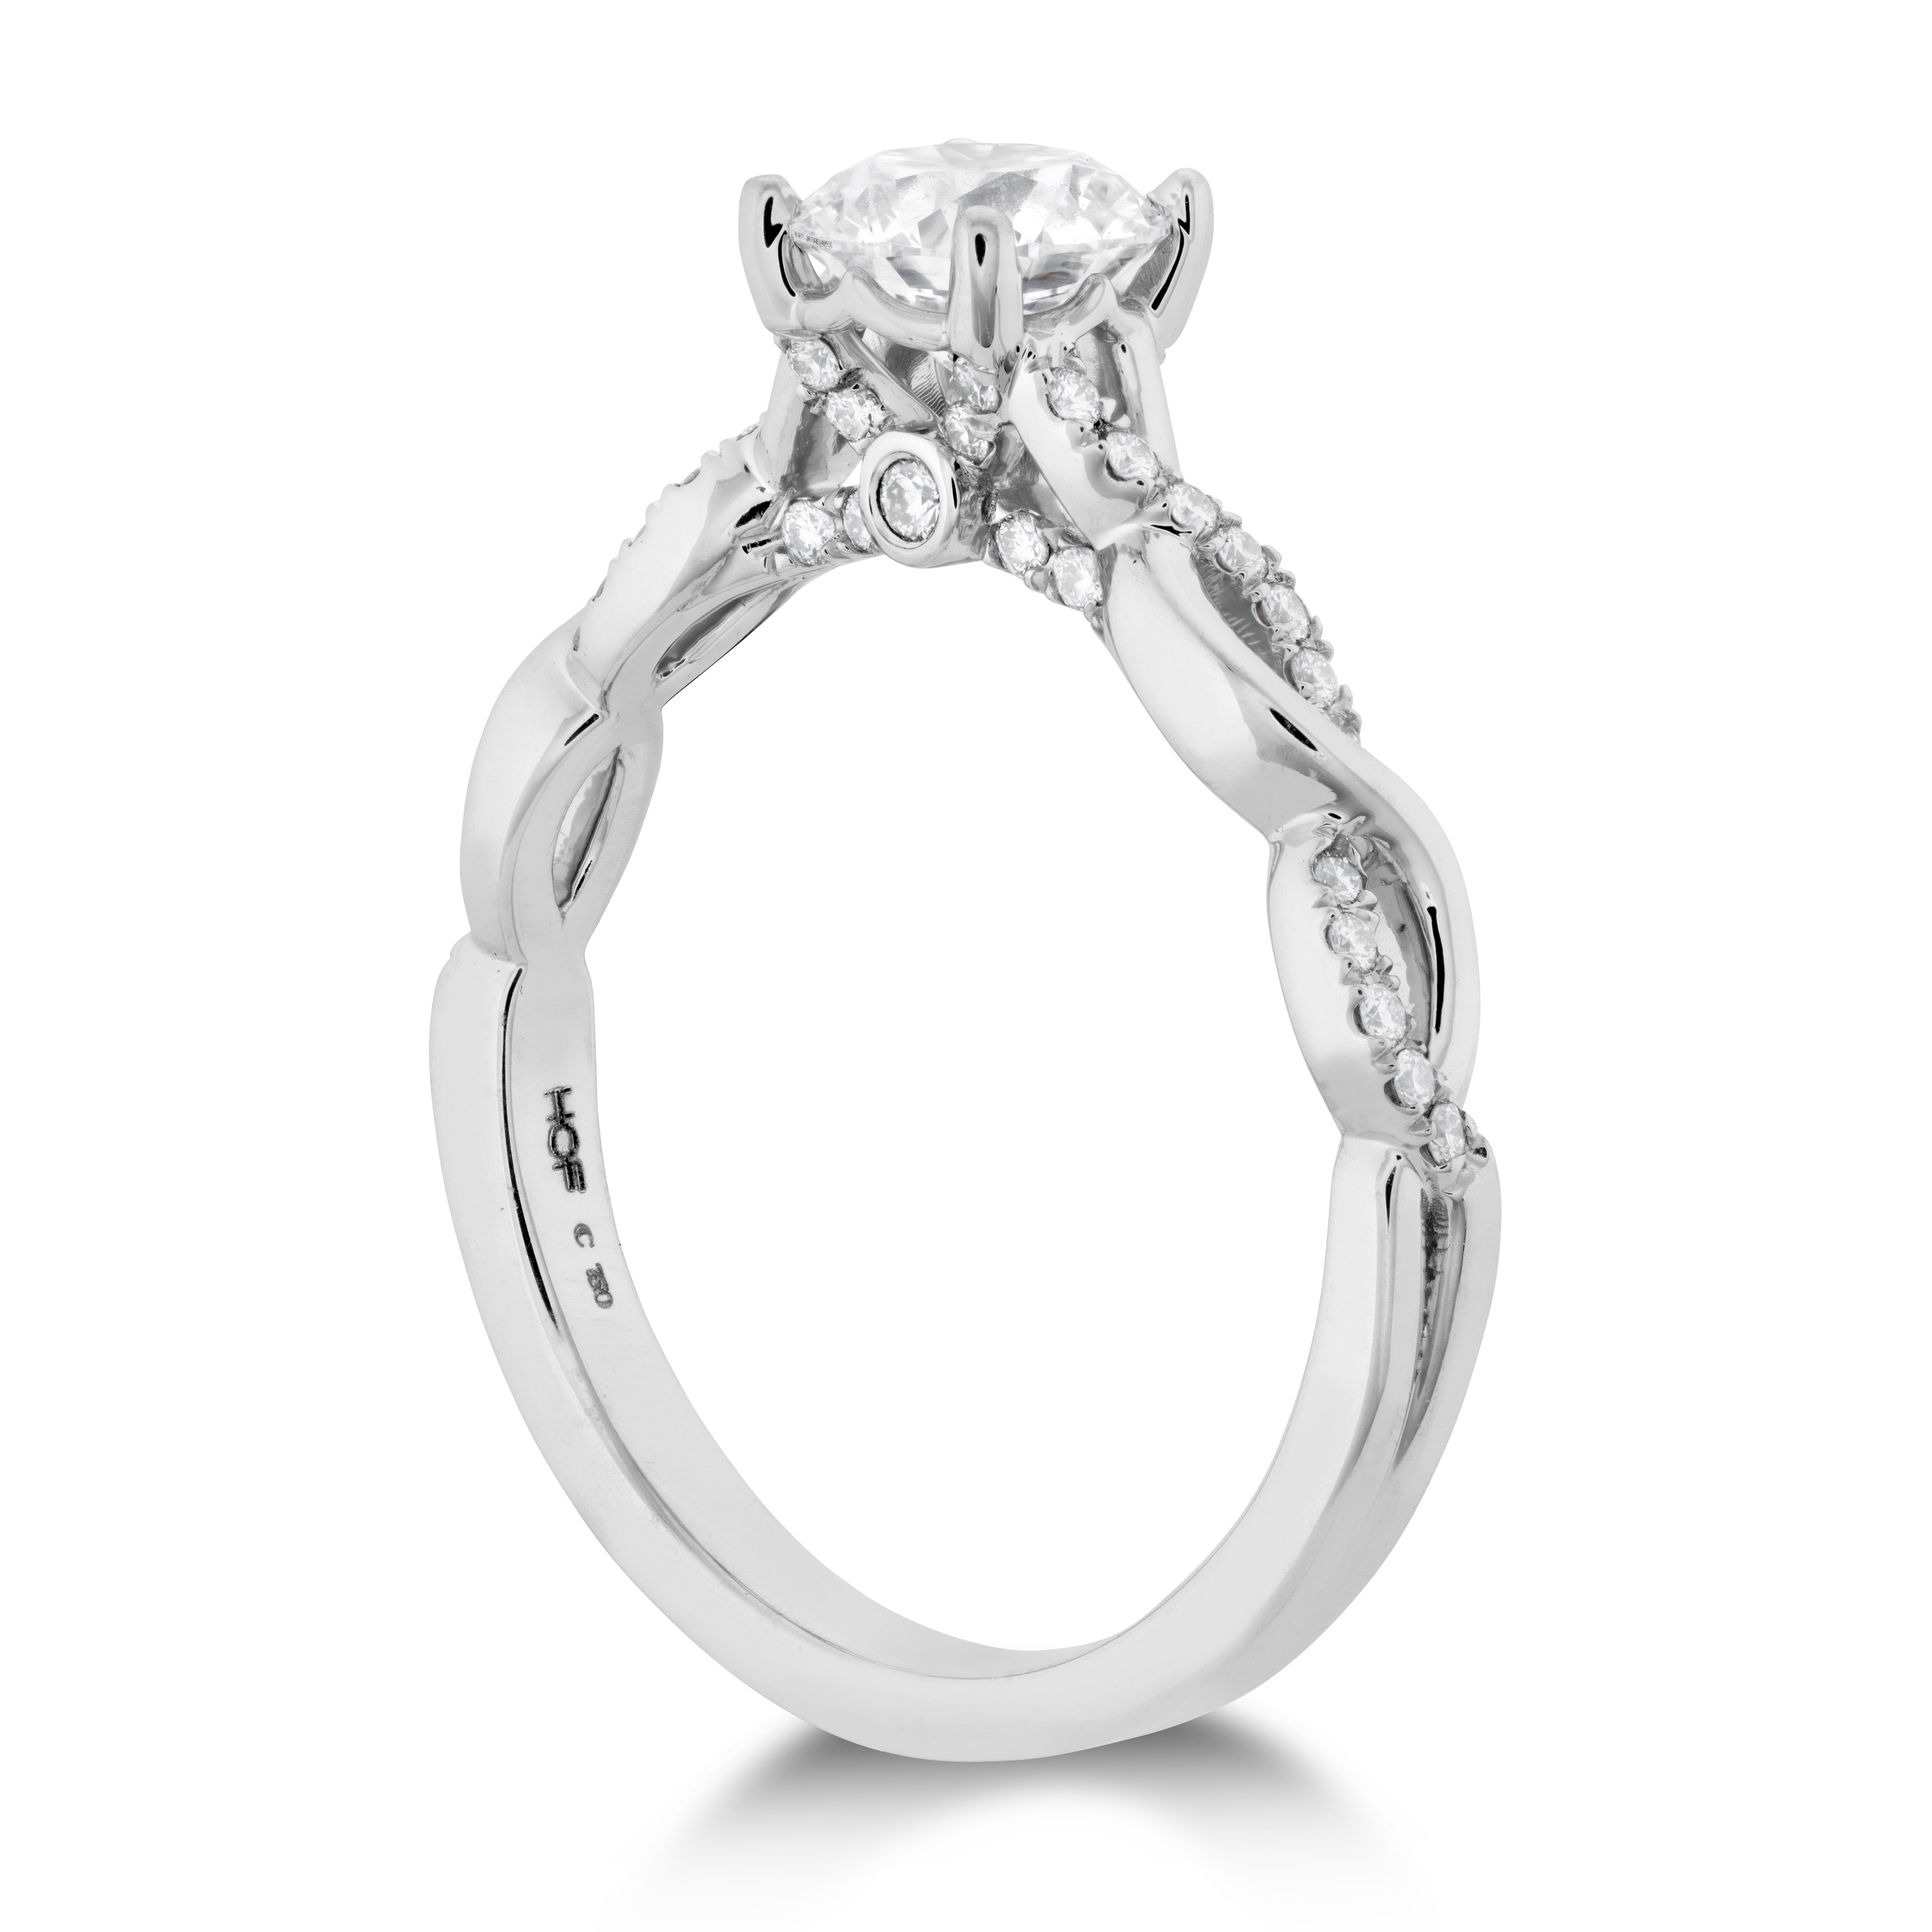 https://www.arthursjewelers.com/content/images/thumbs/Original/Destiny Lace HOF Ring_1-19362220.jpg